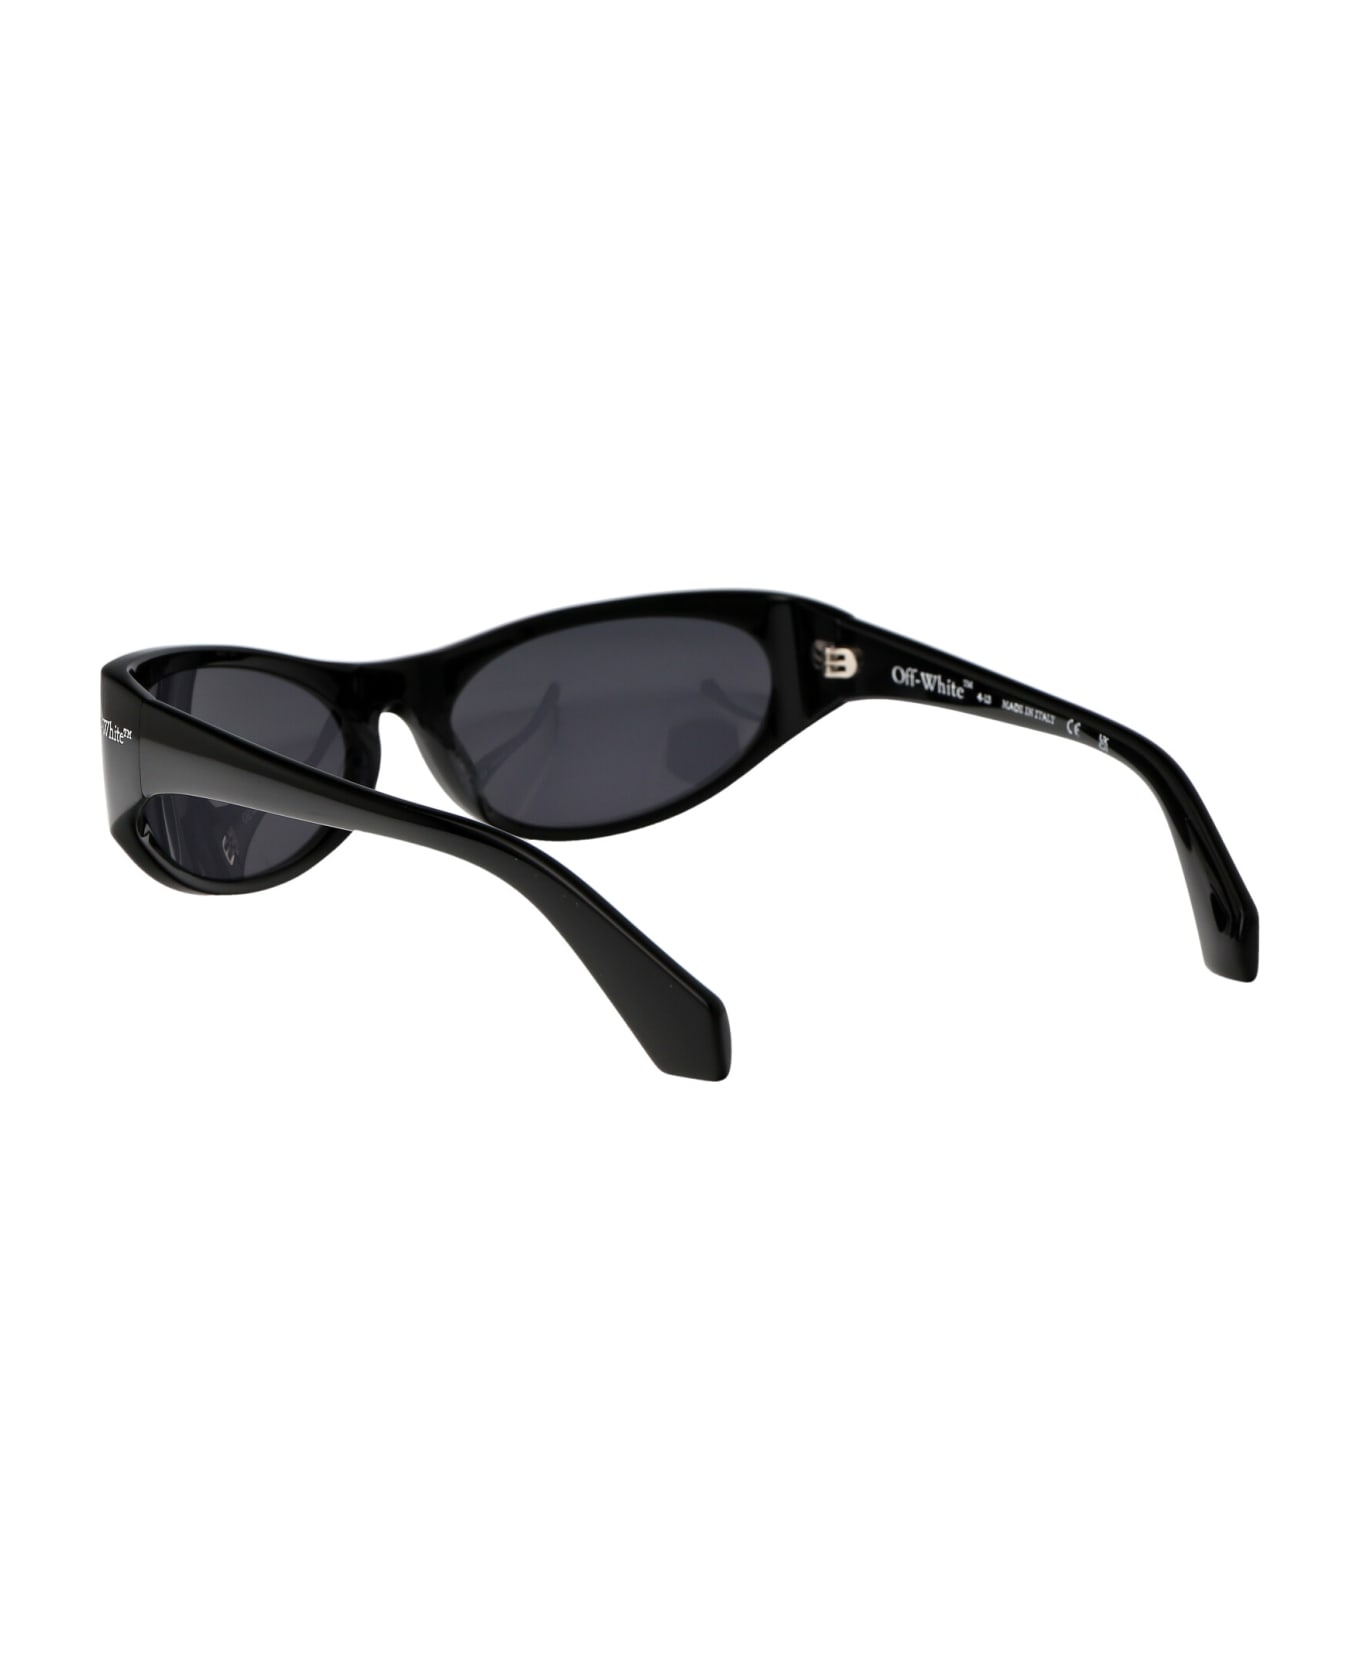 Off-White Napoli Sunglasses - 1007 BLACK サングラス